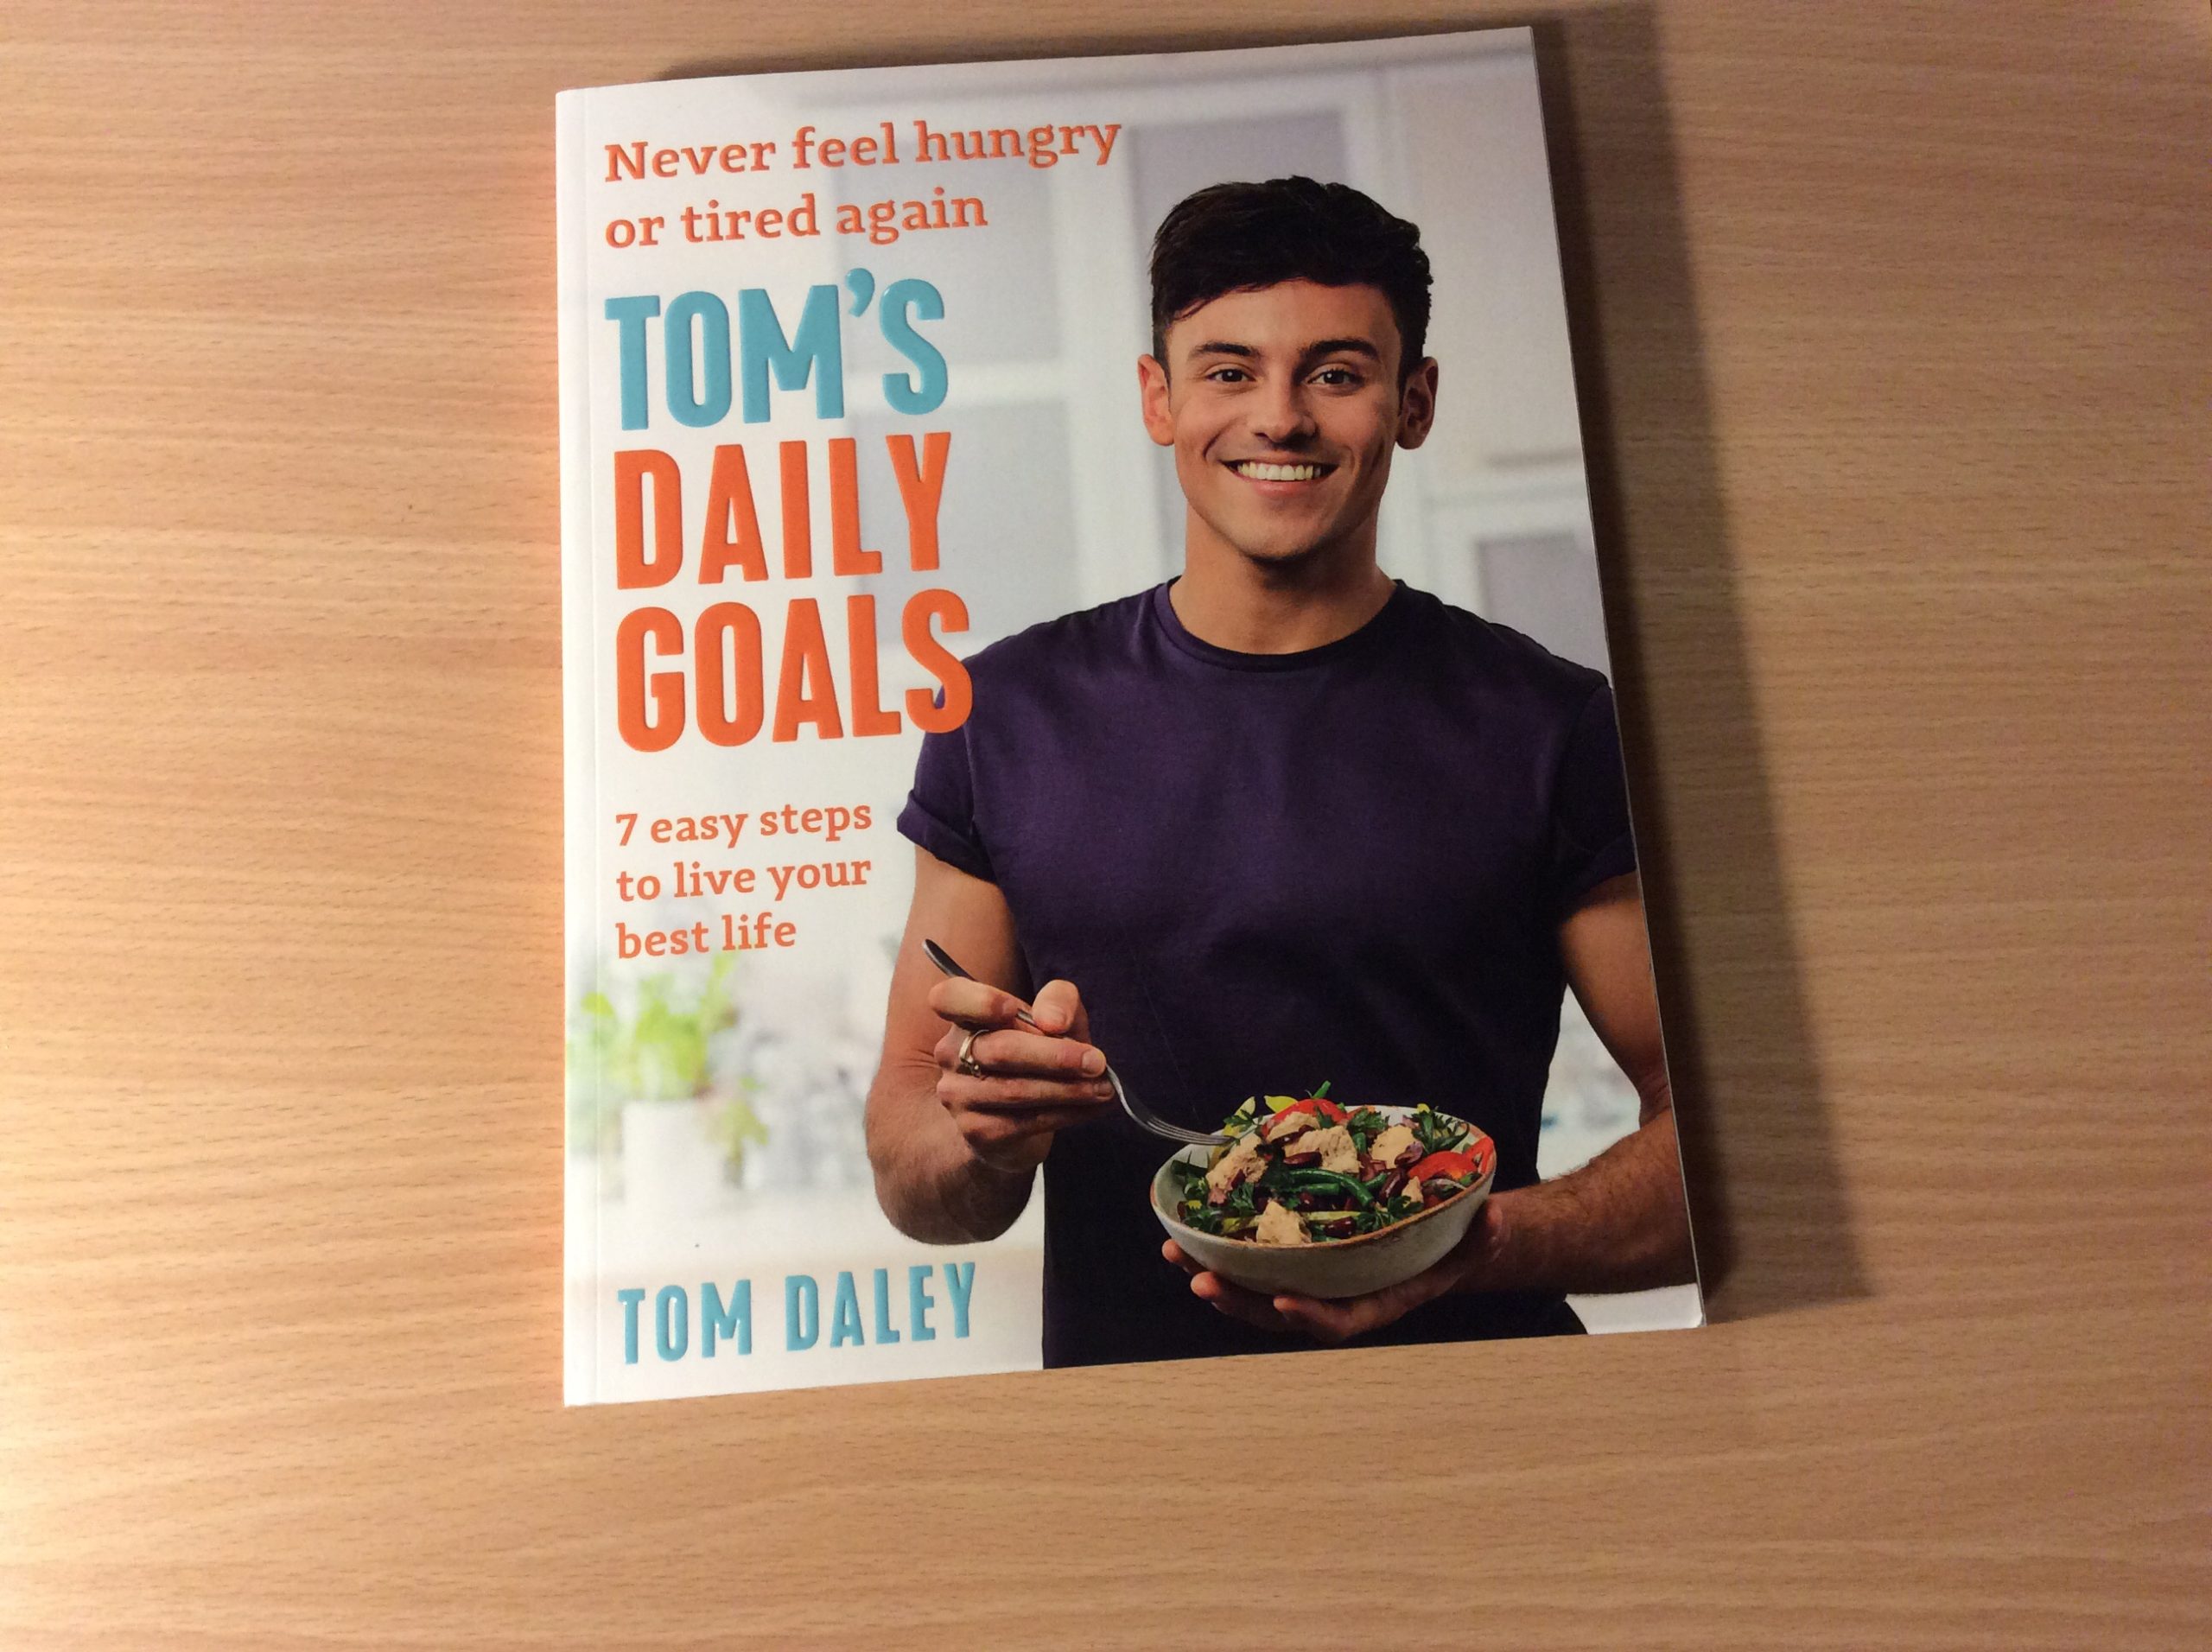 Tom Daley’s Goals